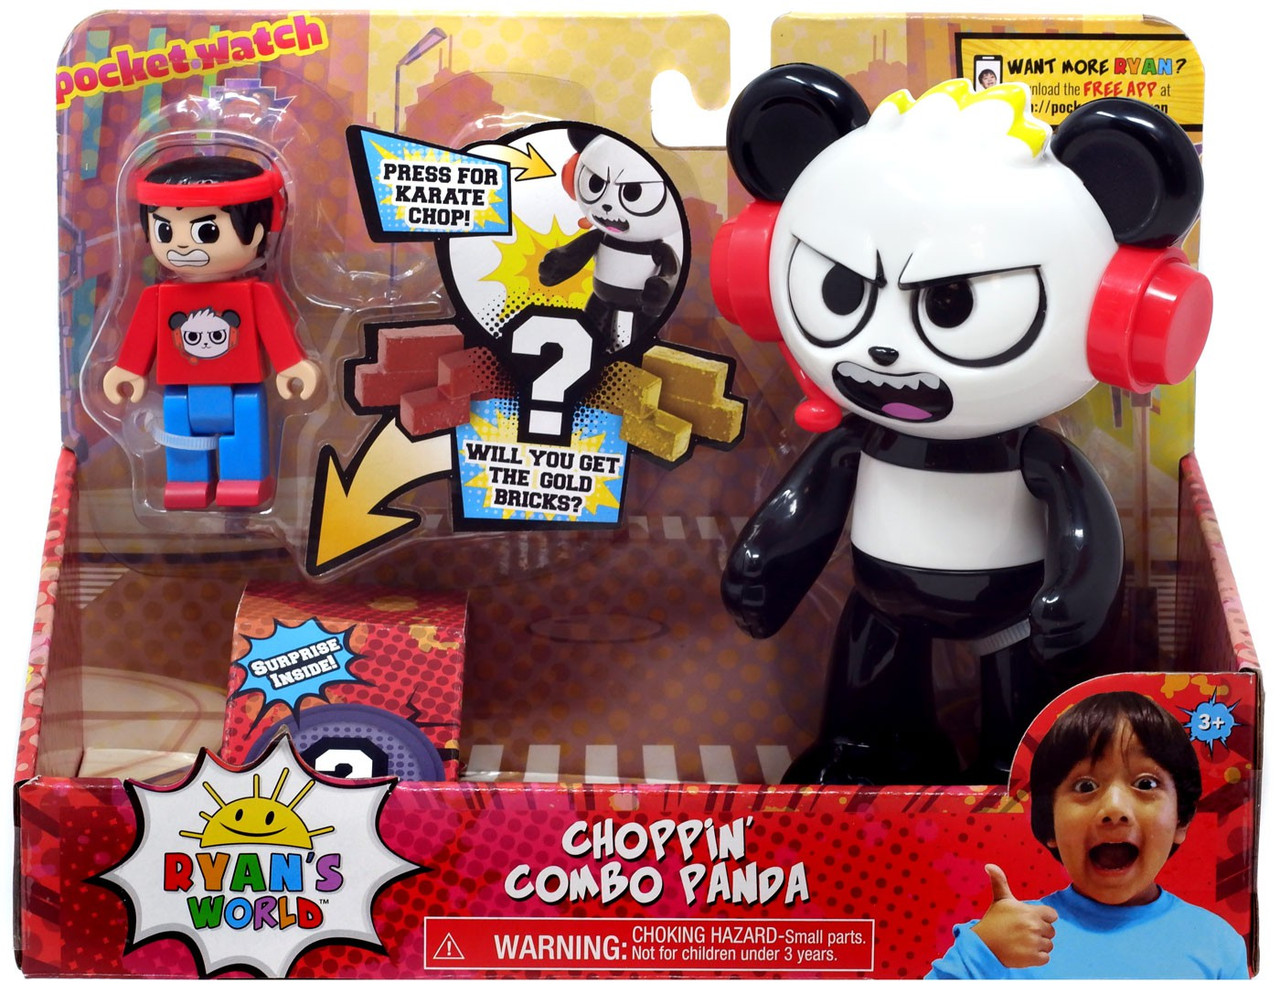 ryan's world combo panda figure